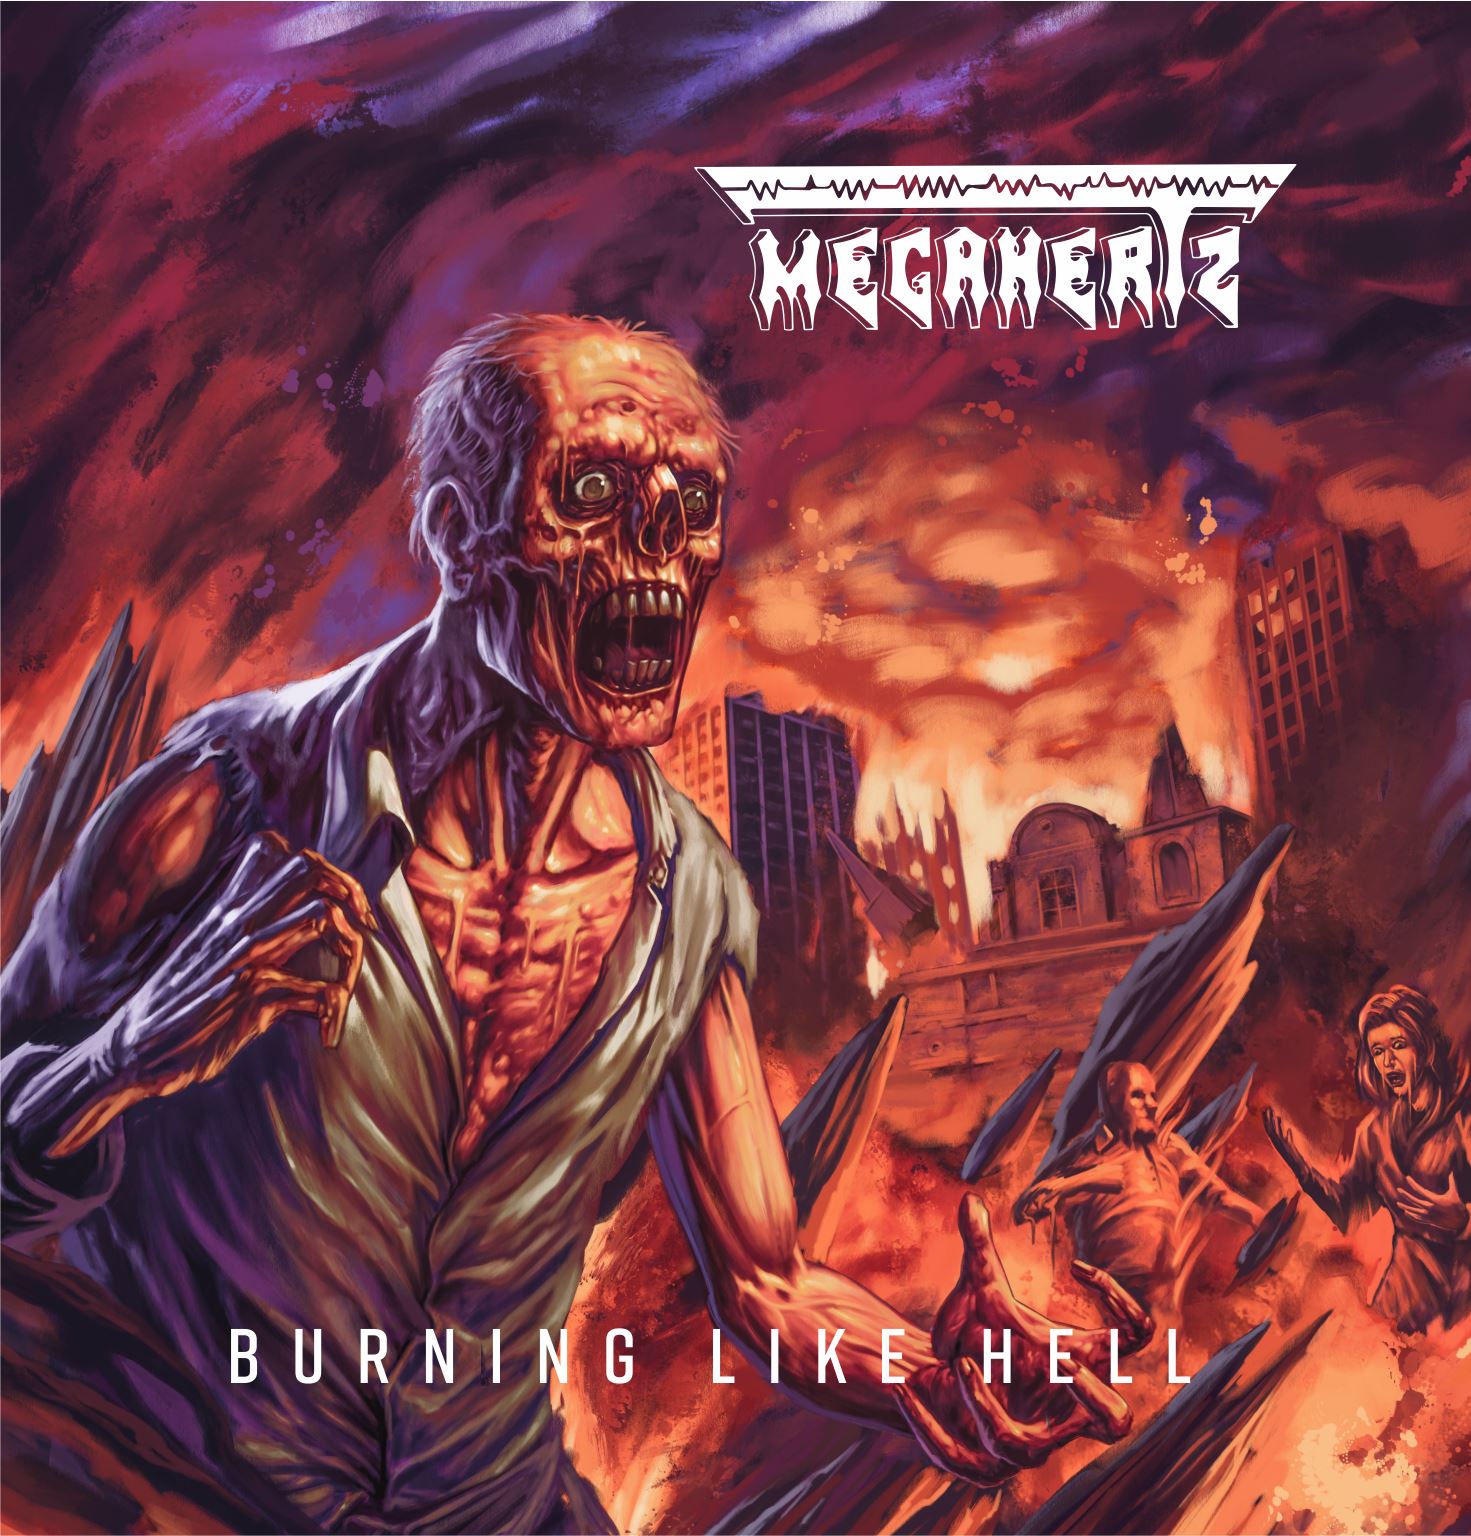 Burning Like Hell”, do Megahertz, celebra quase 40 anos de